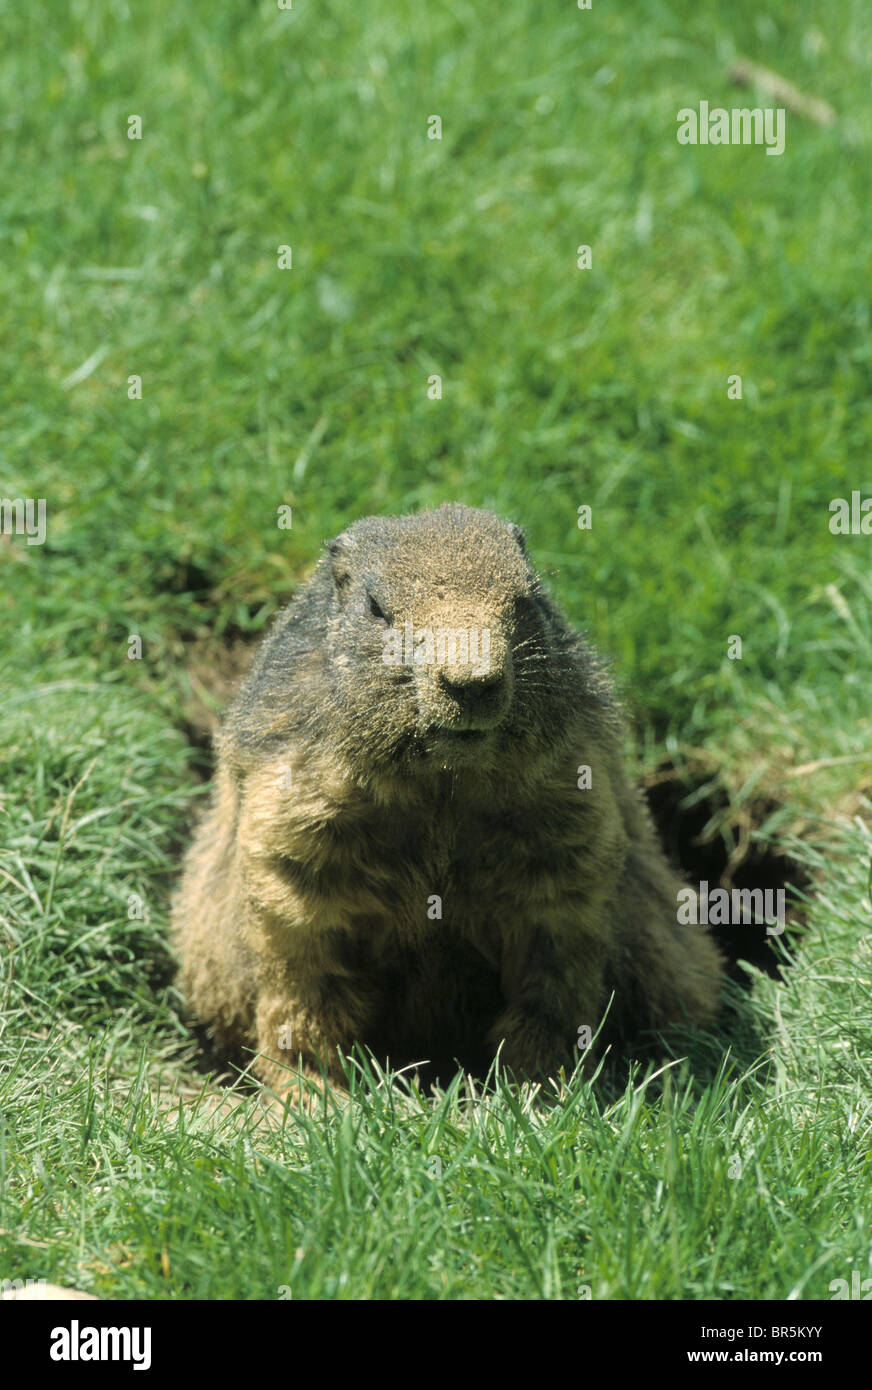 Alpine Marmot (Marmota marmota), with sand in its fur from digging, Allgaeu Alps, Germany, Europe Stock Photo